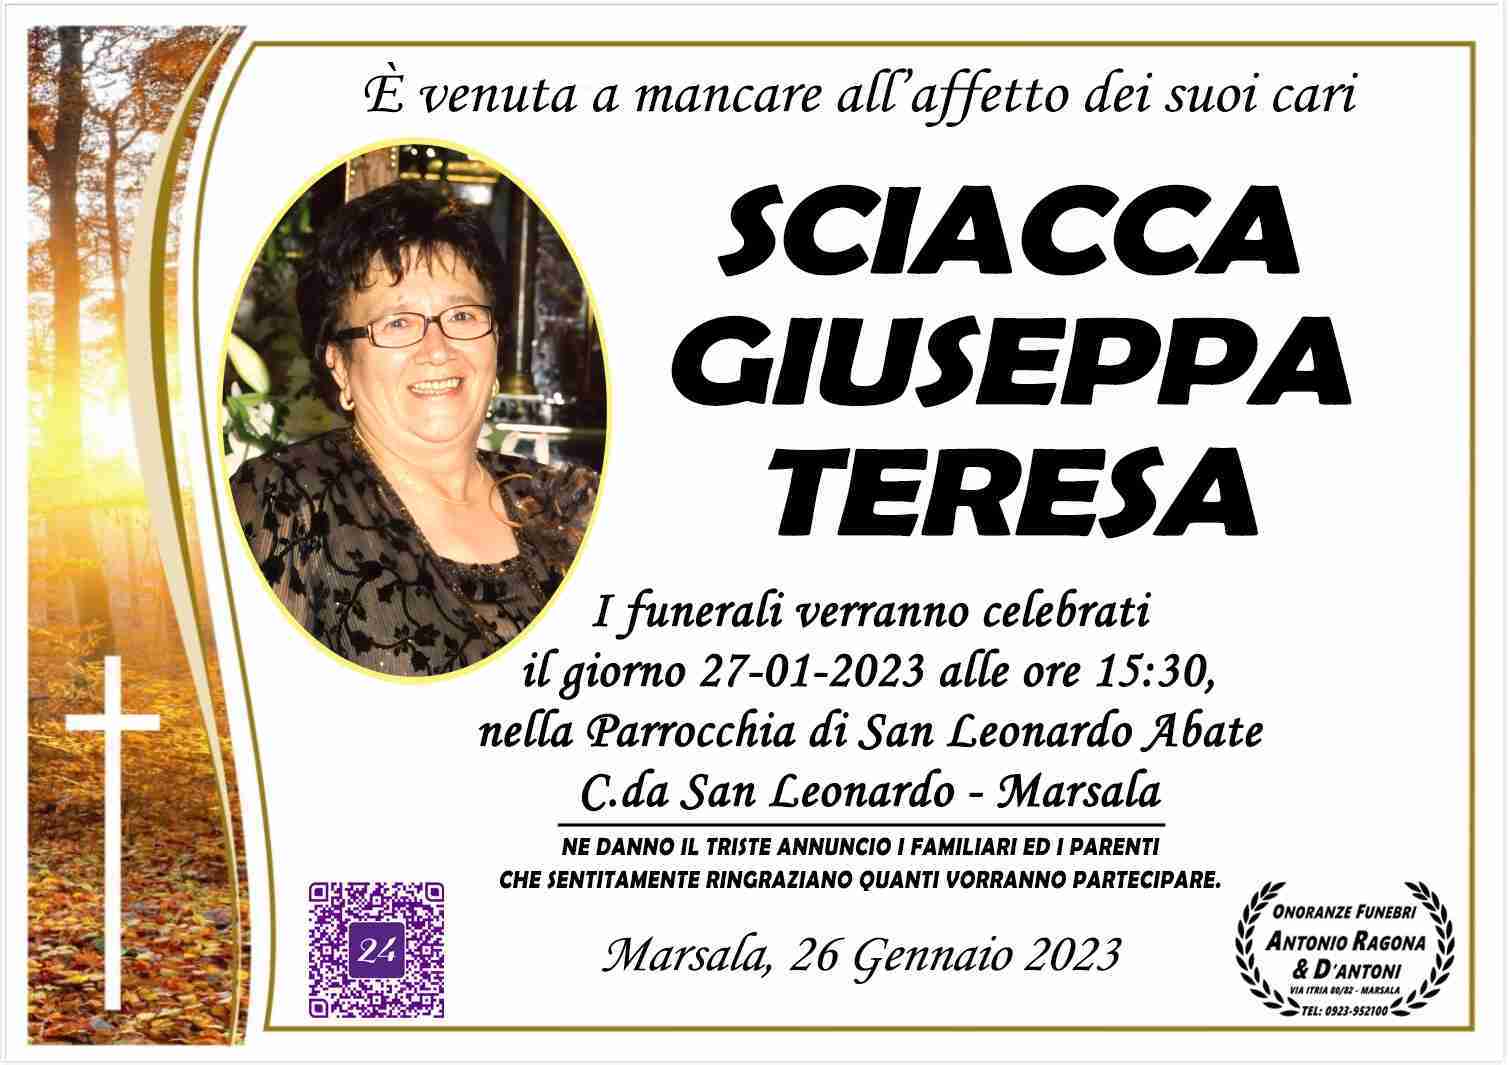 Giuseppa Teresa Sciacca